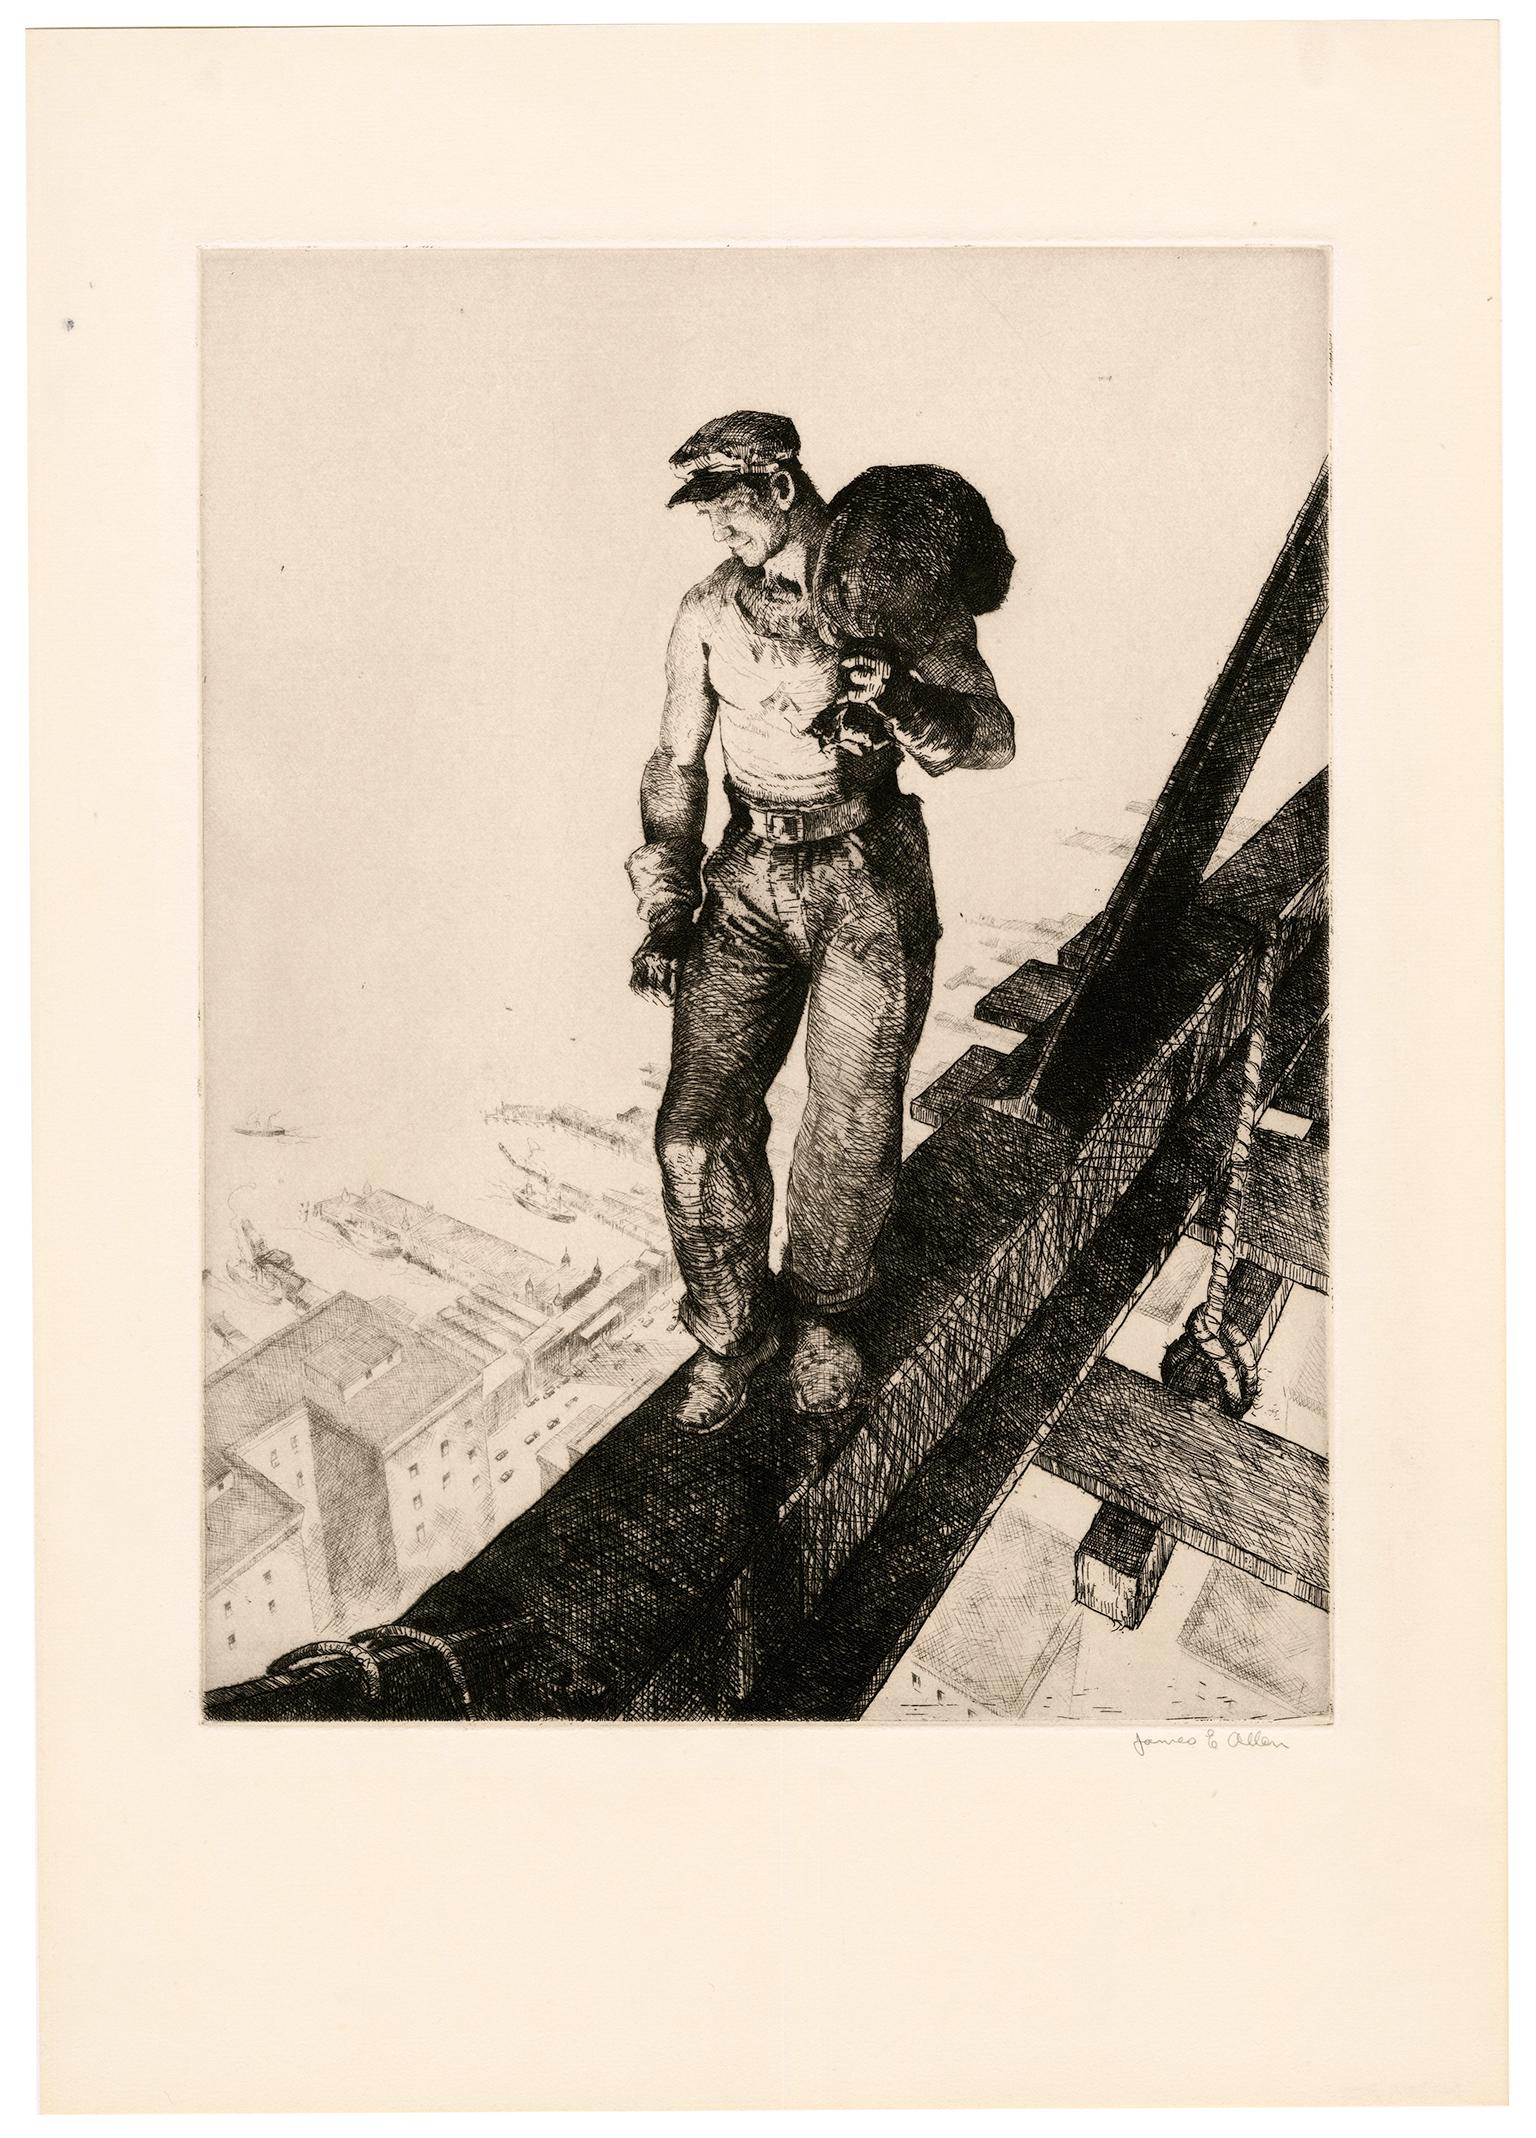 'Spiderboy' — 1930s American Realism, New York City - Print by James Allen